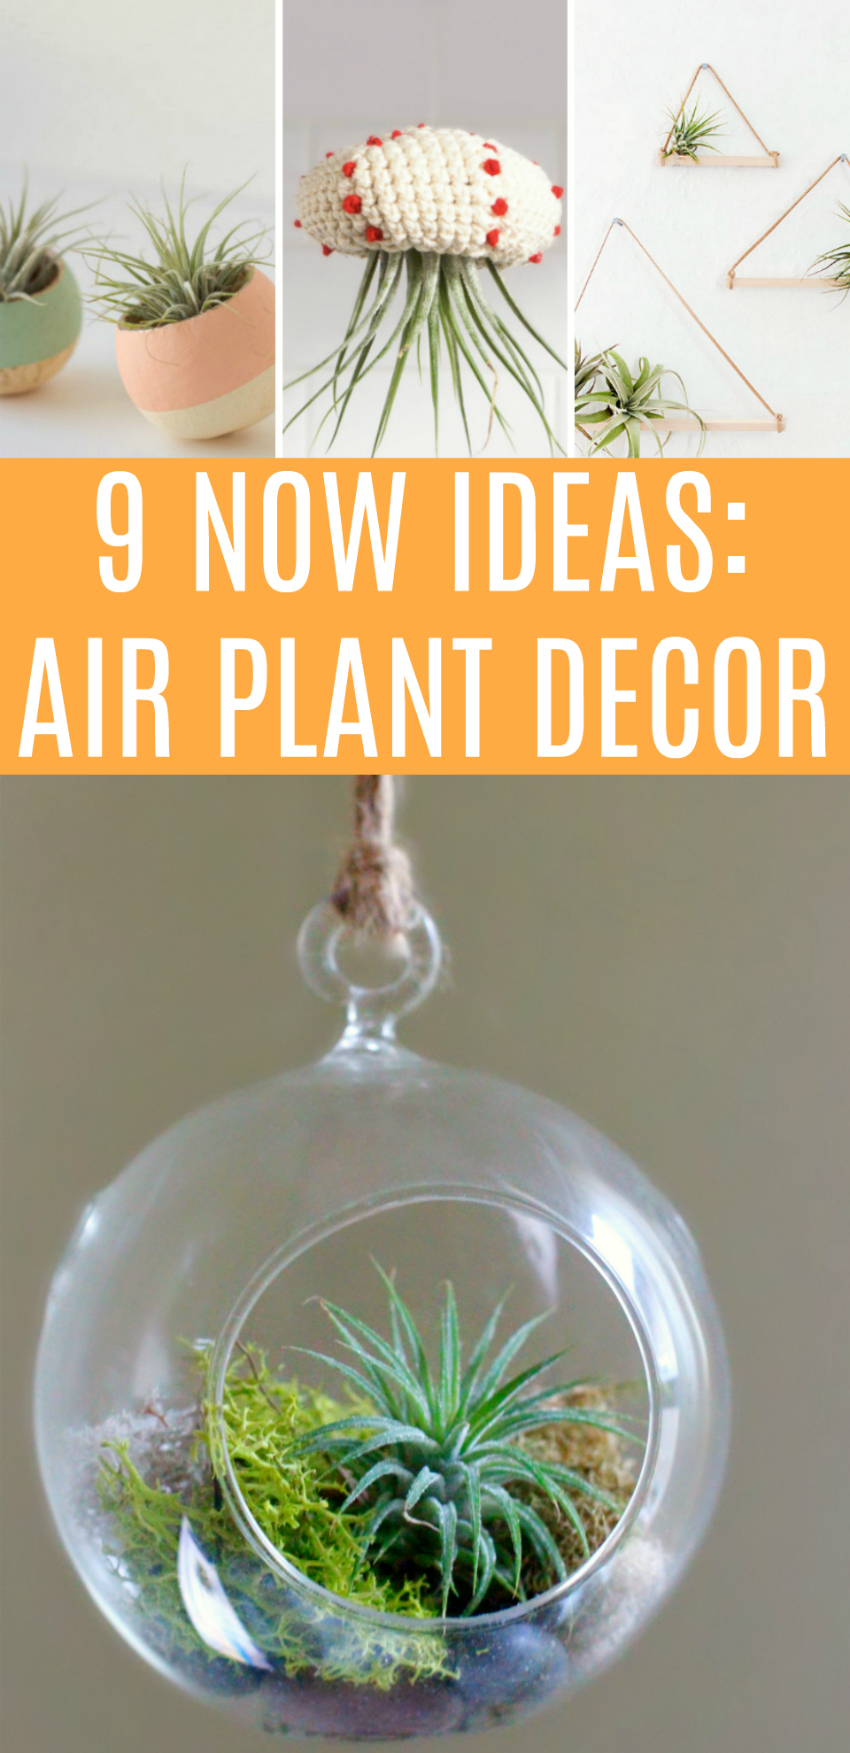 9 Now Ideas for Air Plant Decor